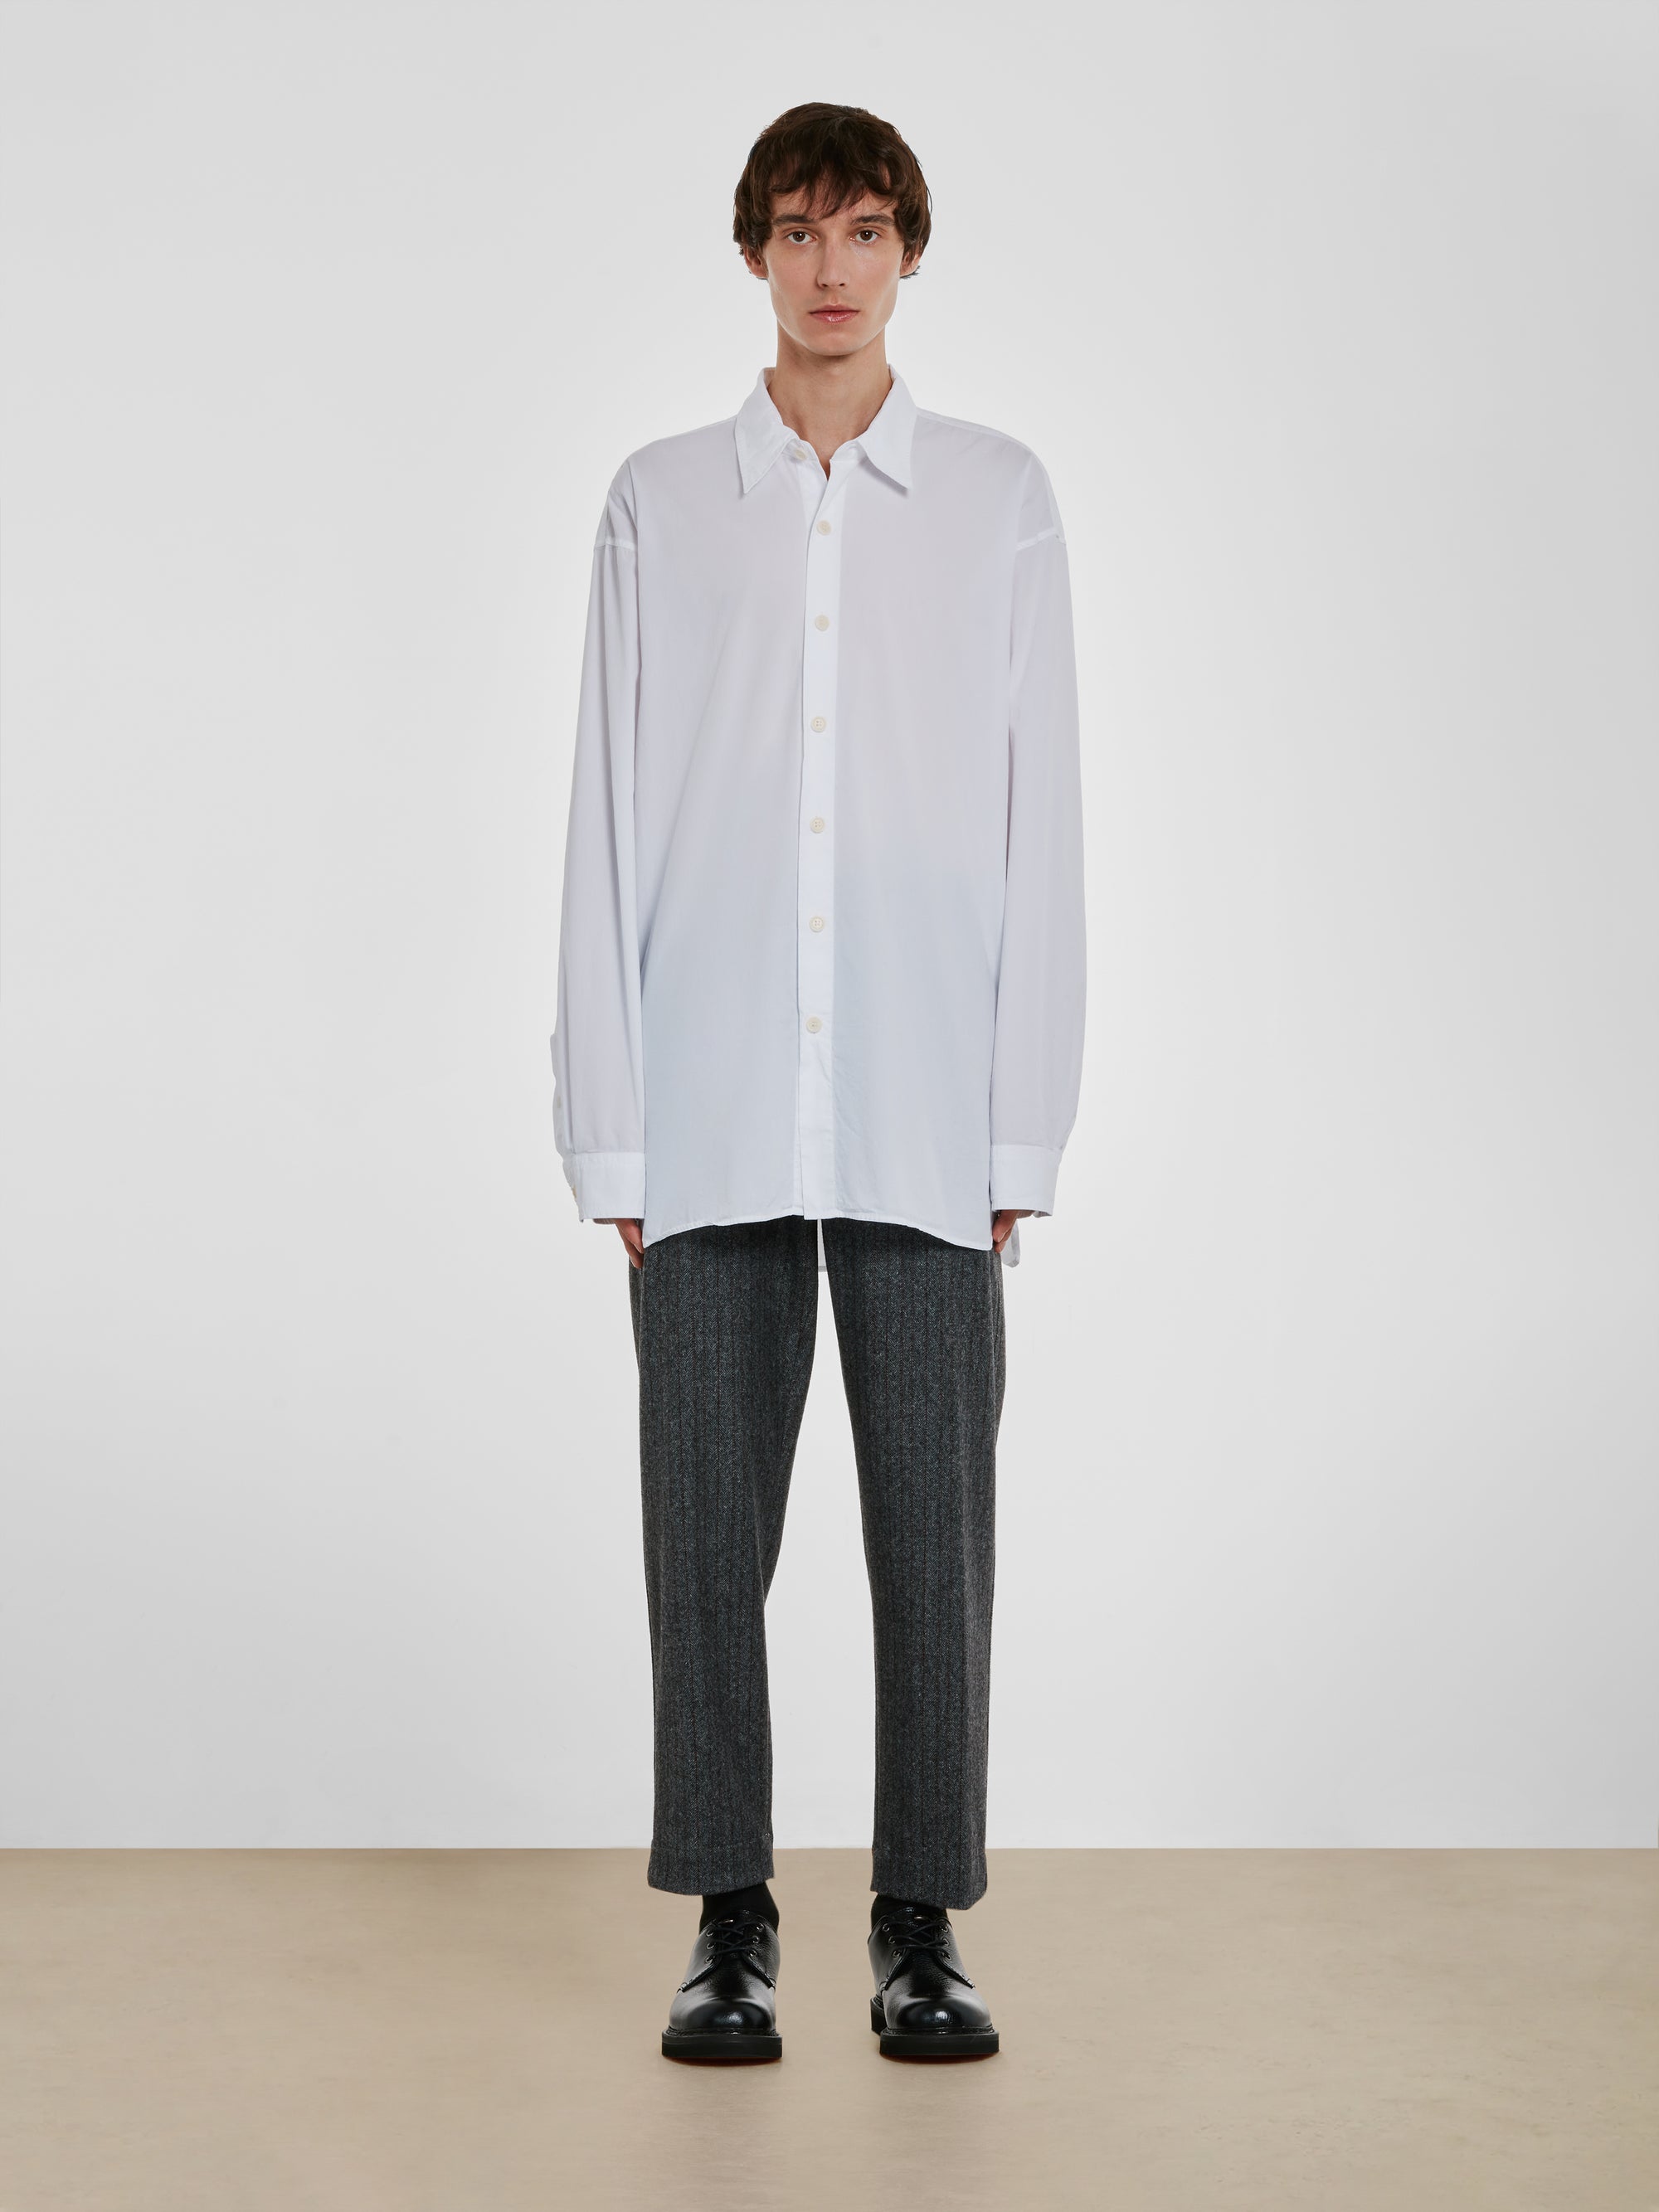 Dries Van Noten - Men’s Boxy Fit Shirt - (White) view 4